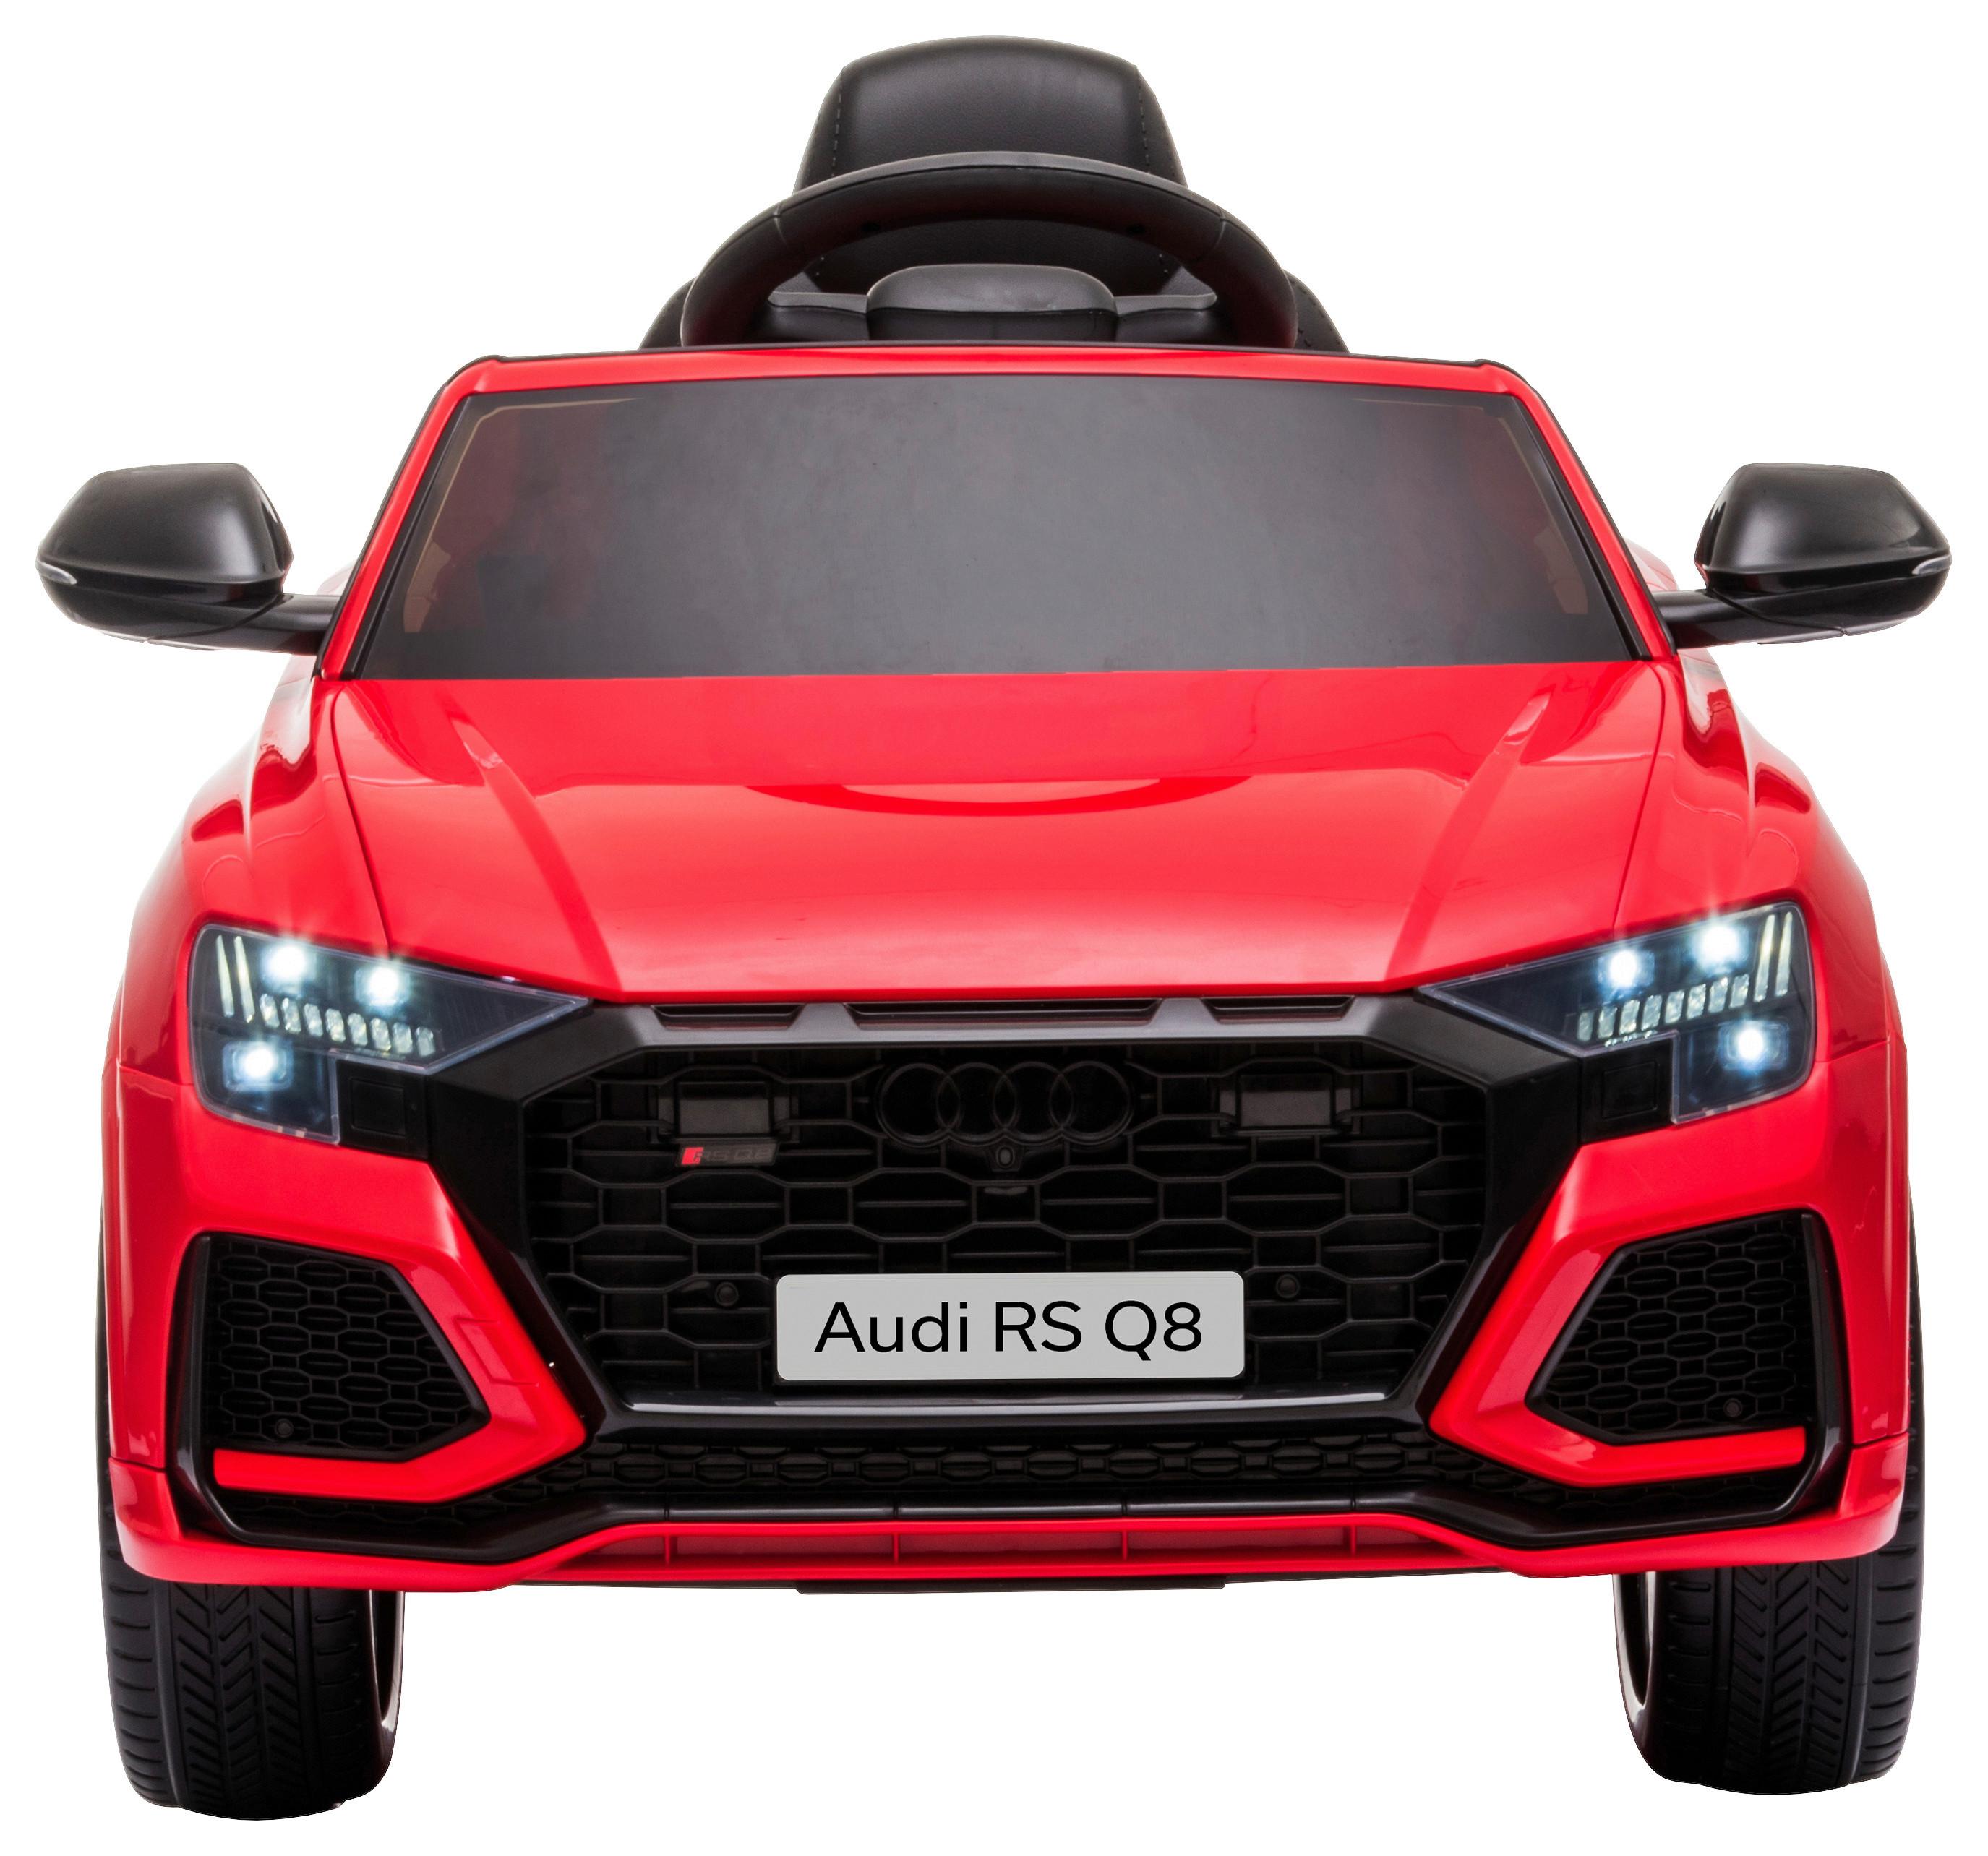 Kinder-Elektroauto Audi Rs Q8 Rot mit Licht/Sound - Rot, Basics, Kunststoff (101/62/51cm)